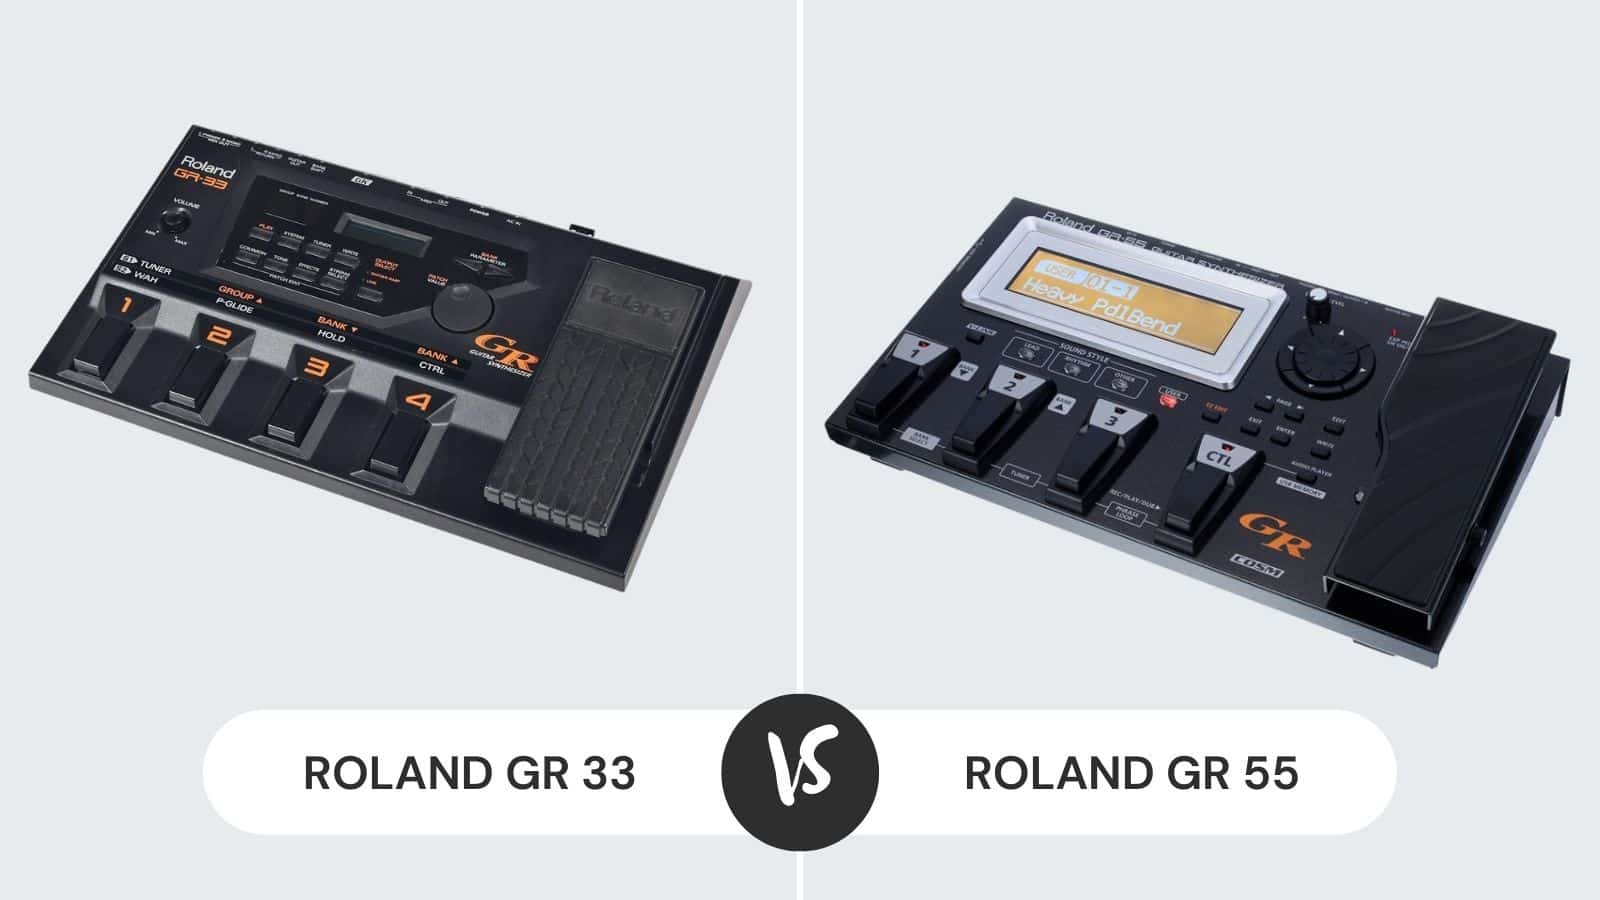 Roland GR 33 vs GR 55